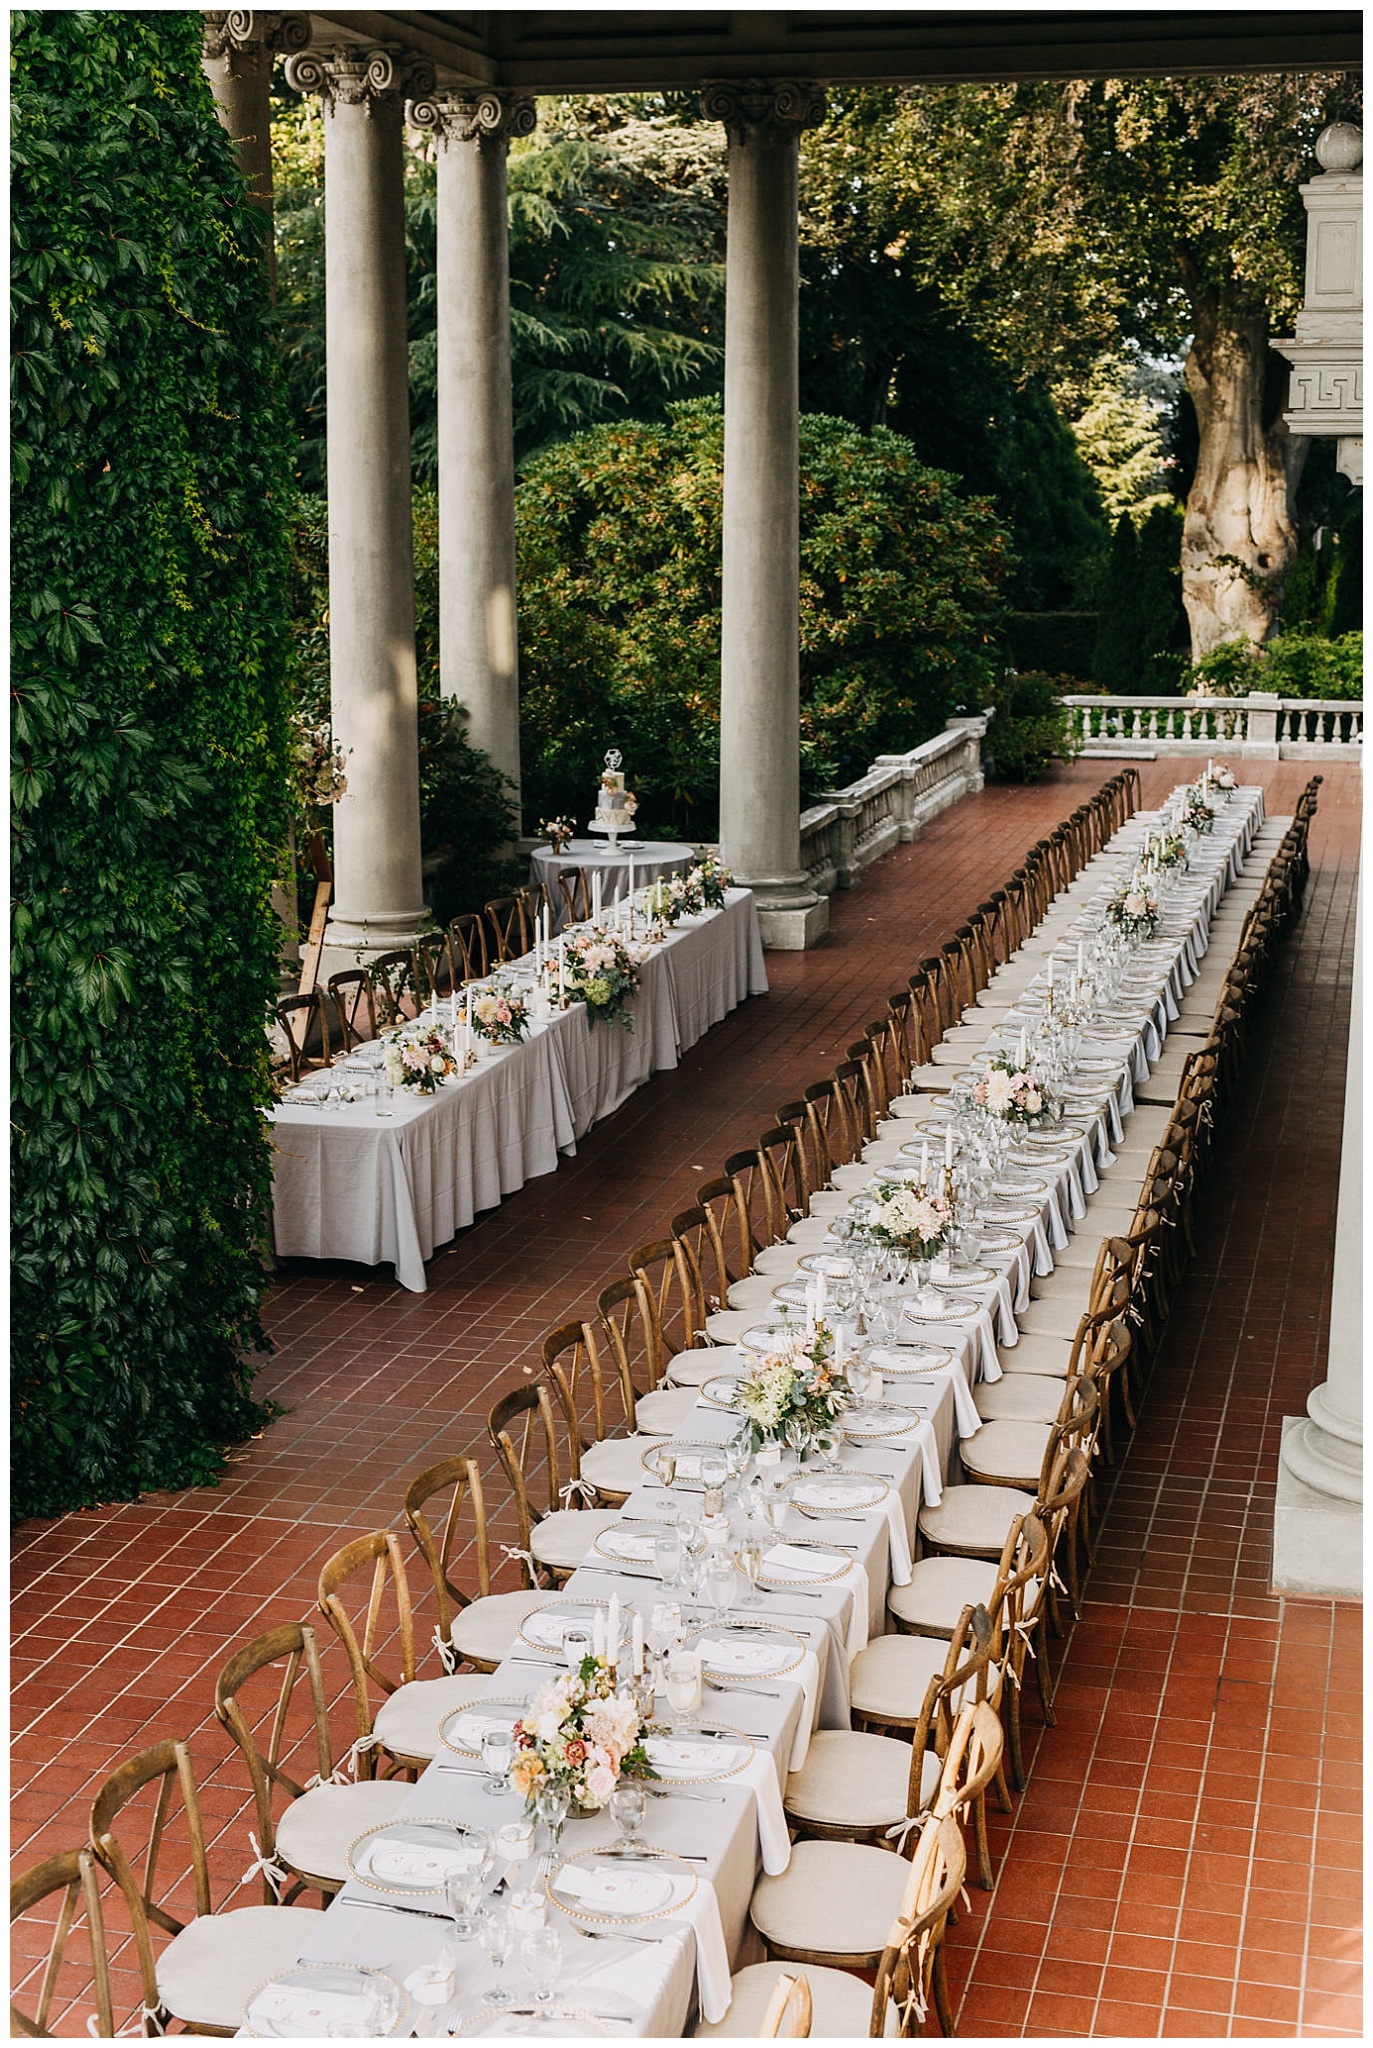 reception long table dinner decor at hycroft manor wedding